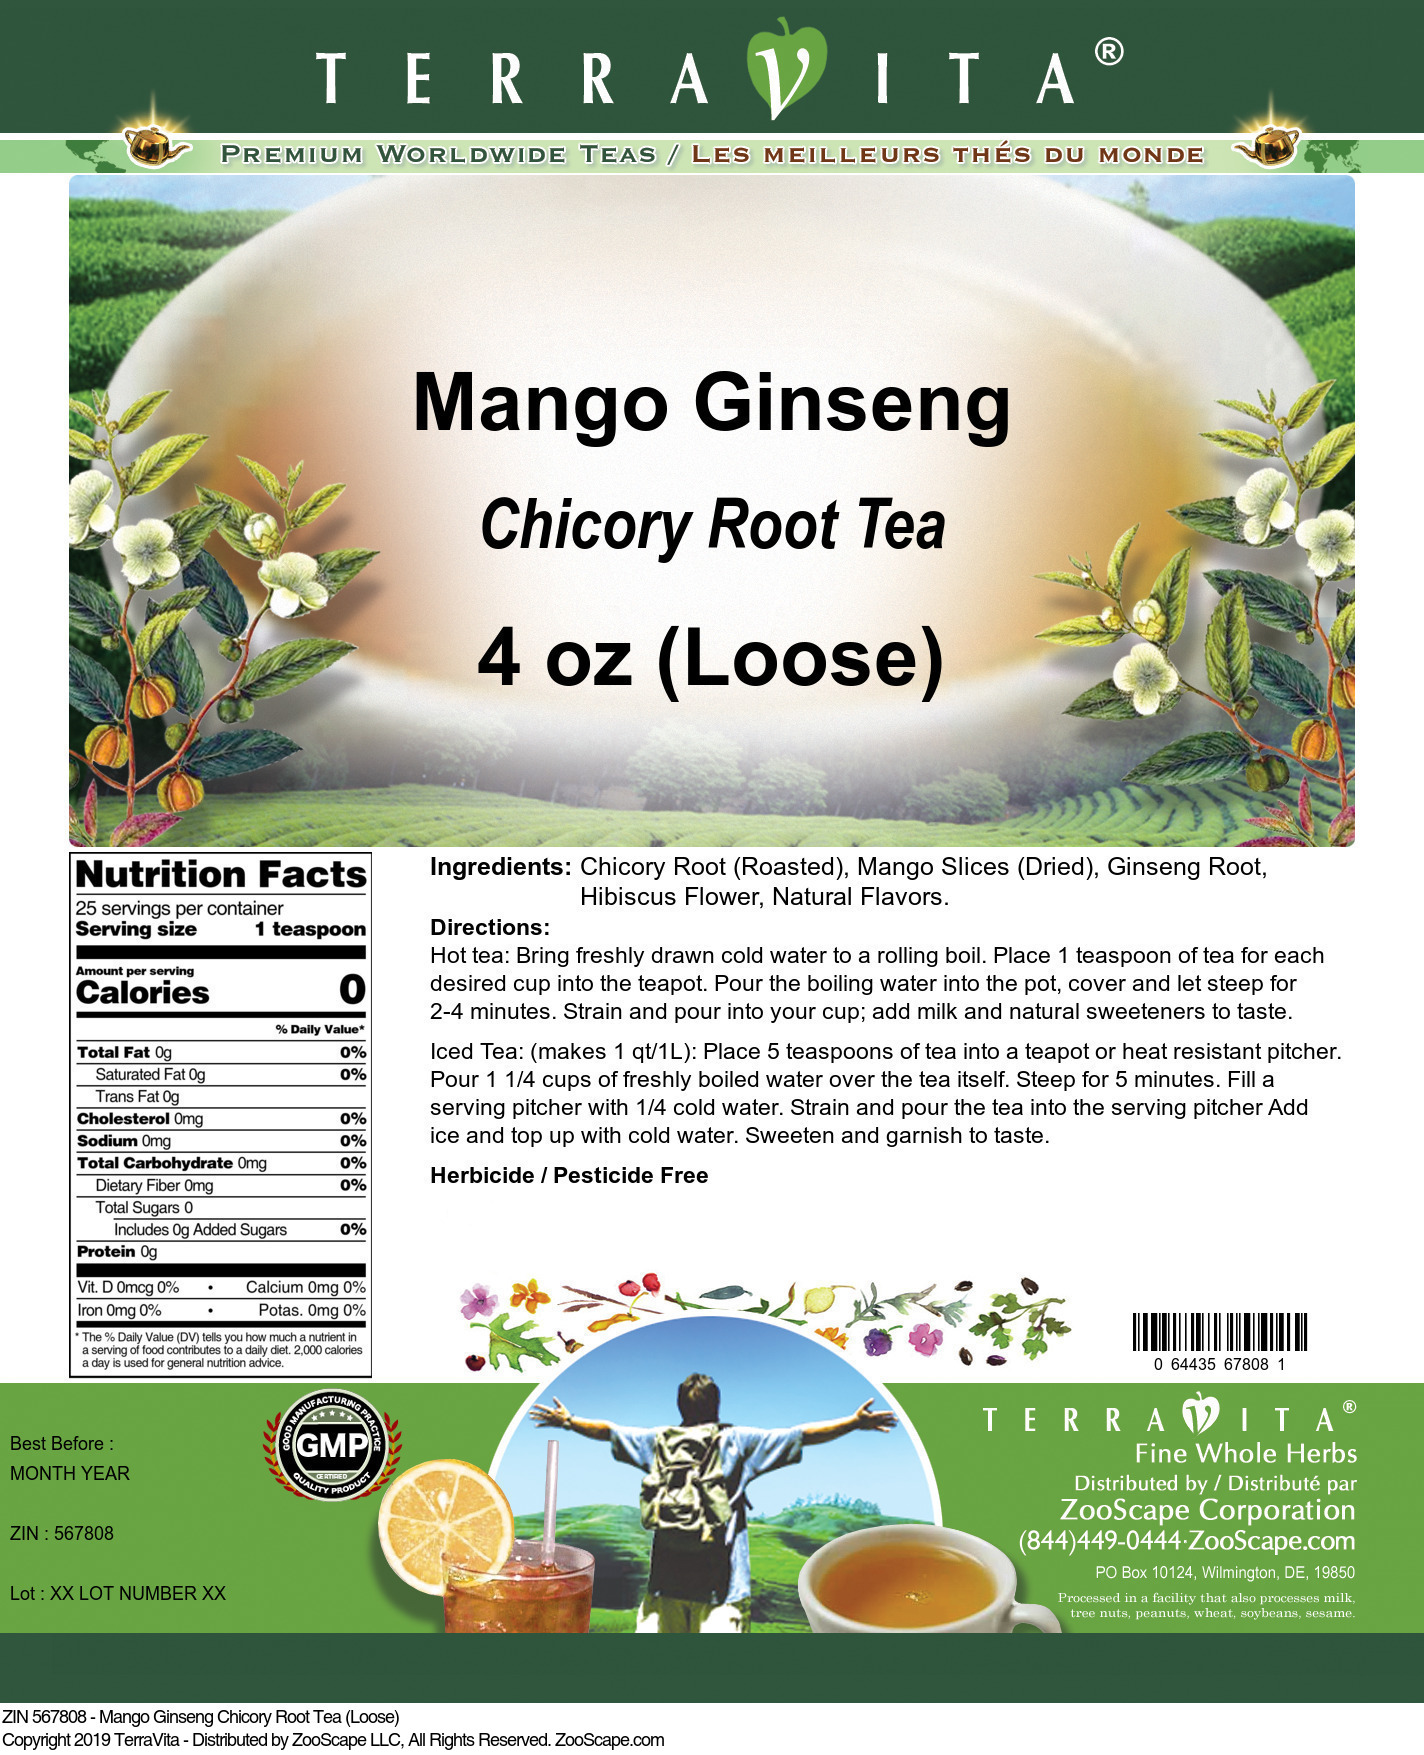 Mango Ginseng Chicory Root Tea (Loose) - Label